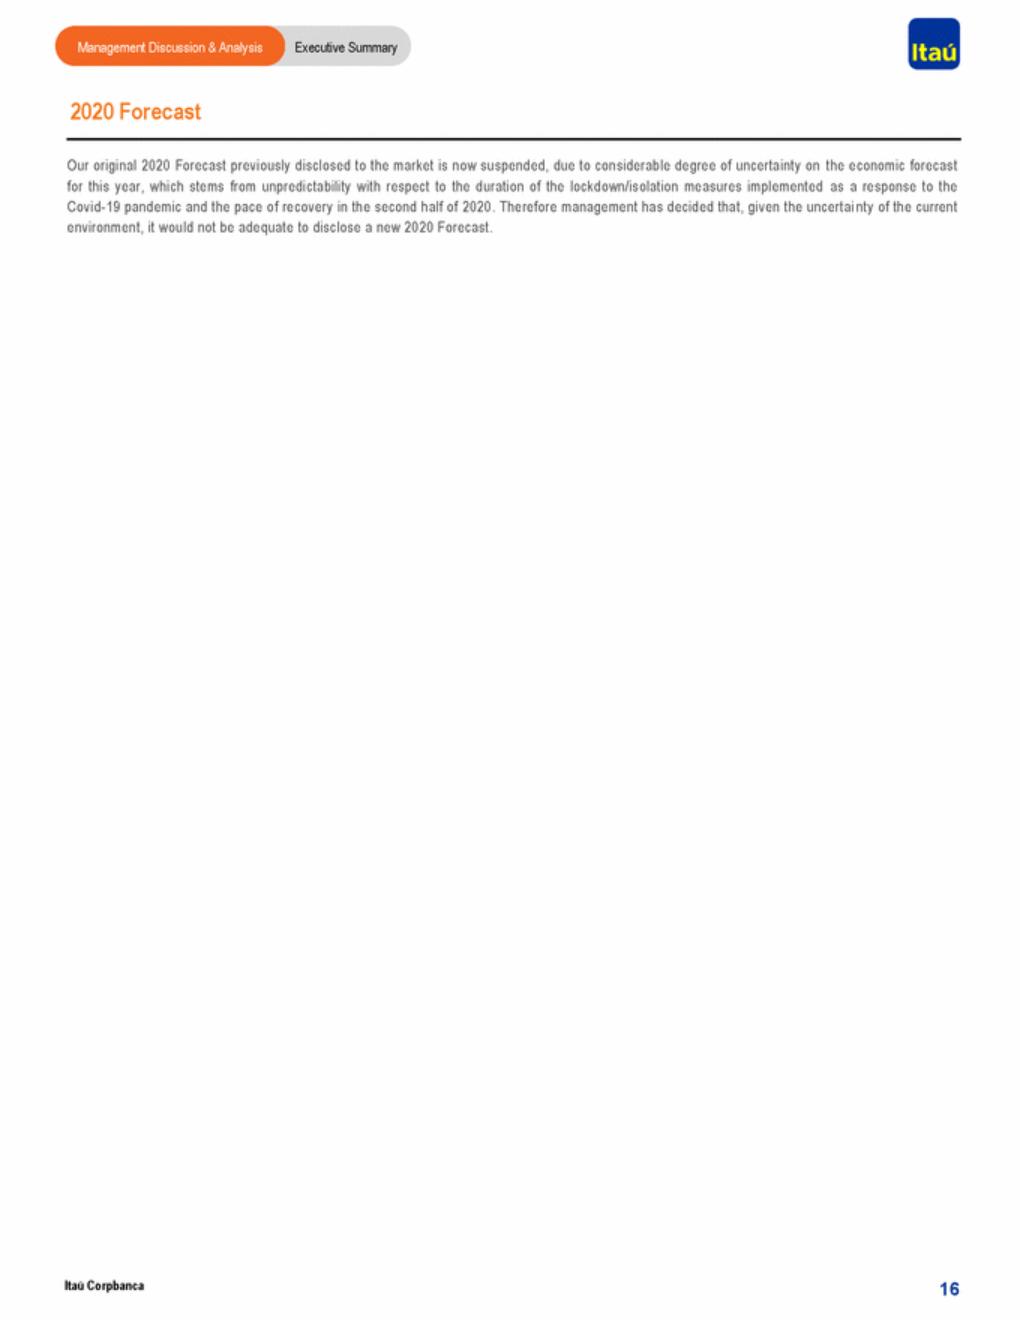 New Microsoft Word Document_itaú corpbanca 2q20 md&a_page_16.gif